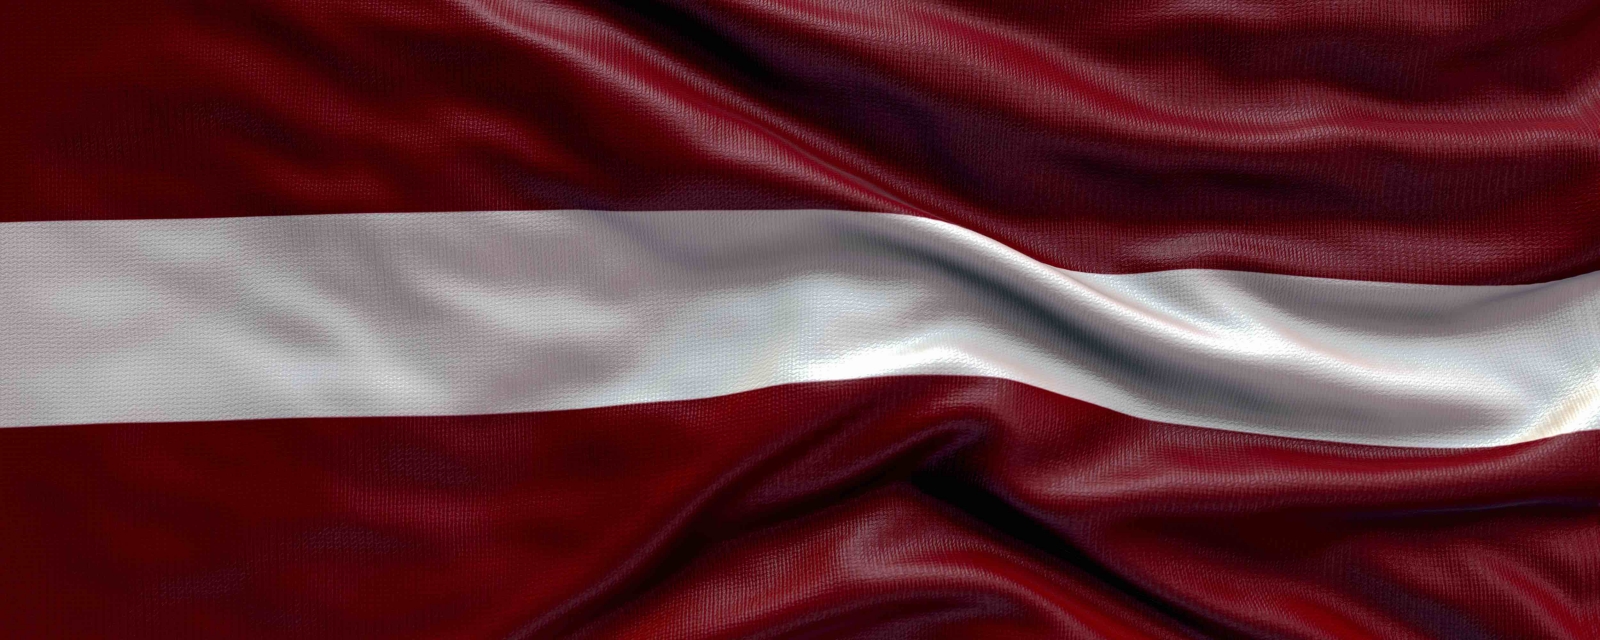 Waving flag of Latvia - Flag of Latvia